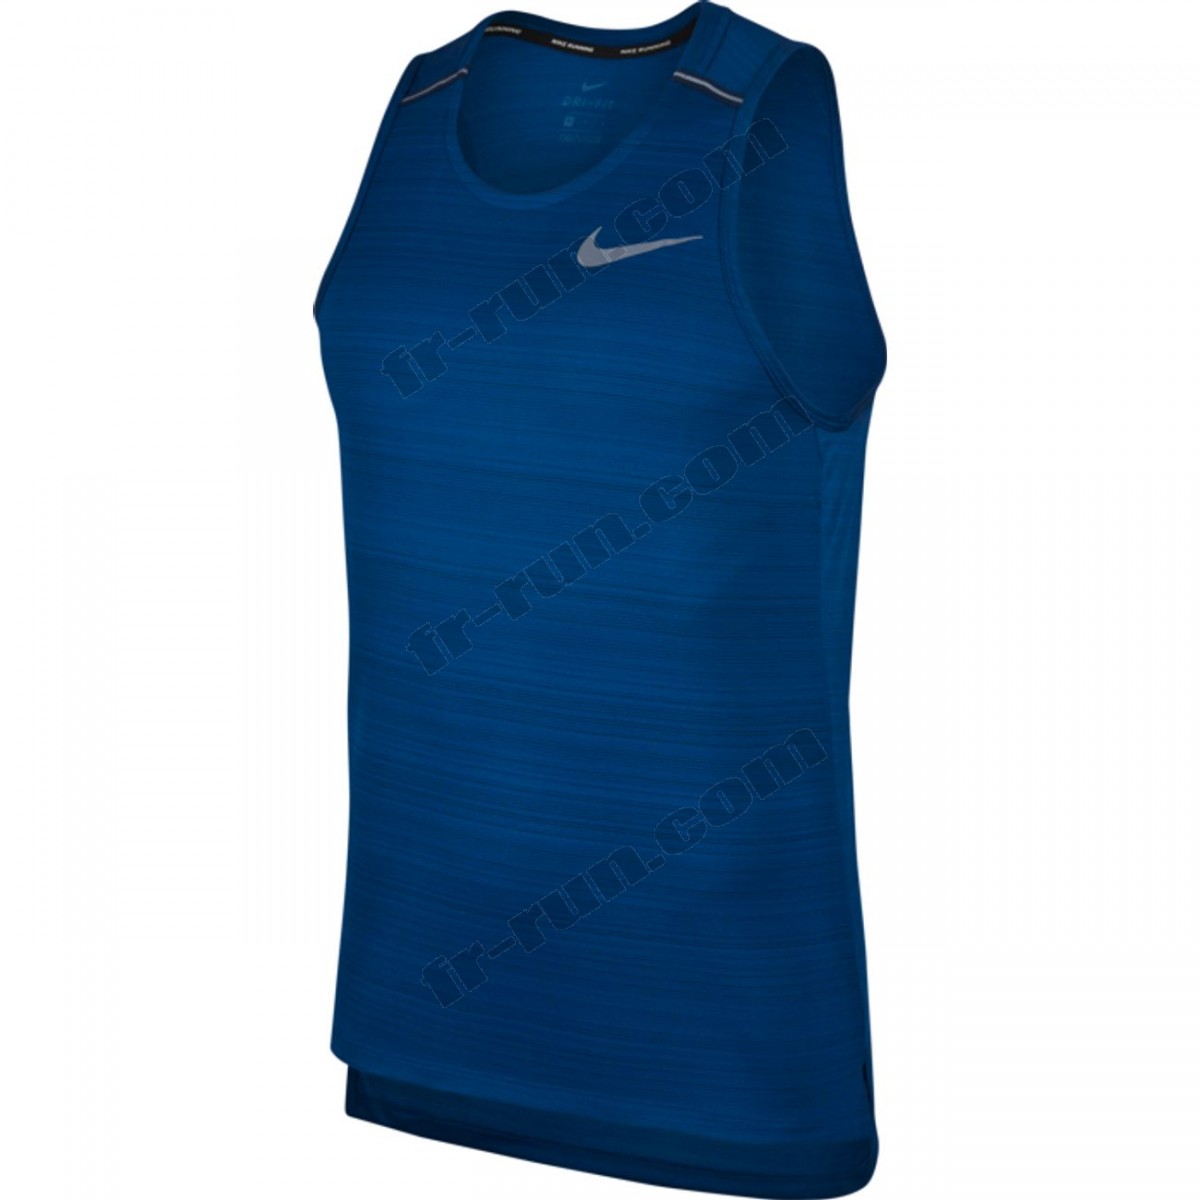 Nike/DEBARDEUR running homme NIKE DRY MILER TANK ◇◇◇ Pas Cher Du Tout - -0